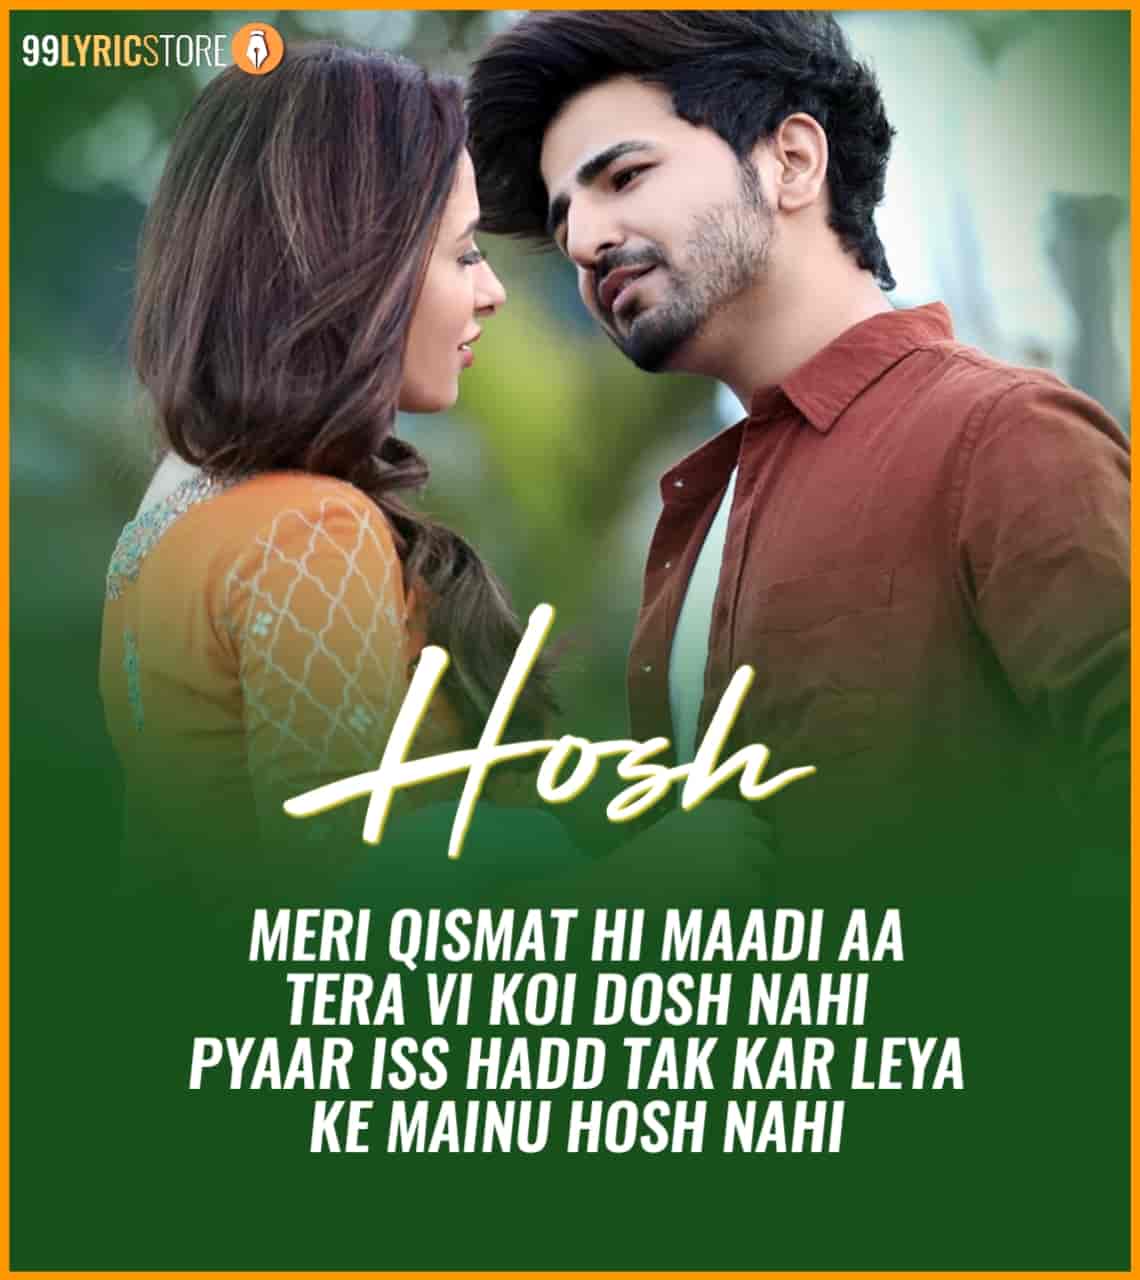 Hosh punjabi song by Nikk Features Mahira Sharma